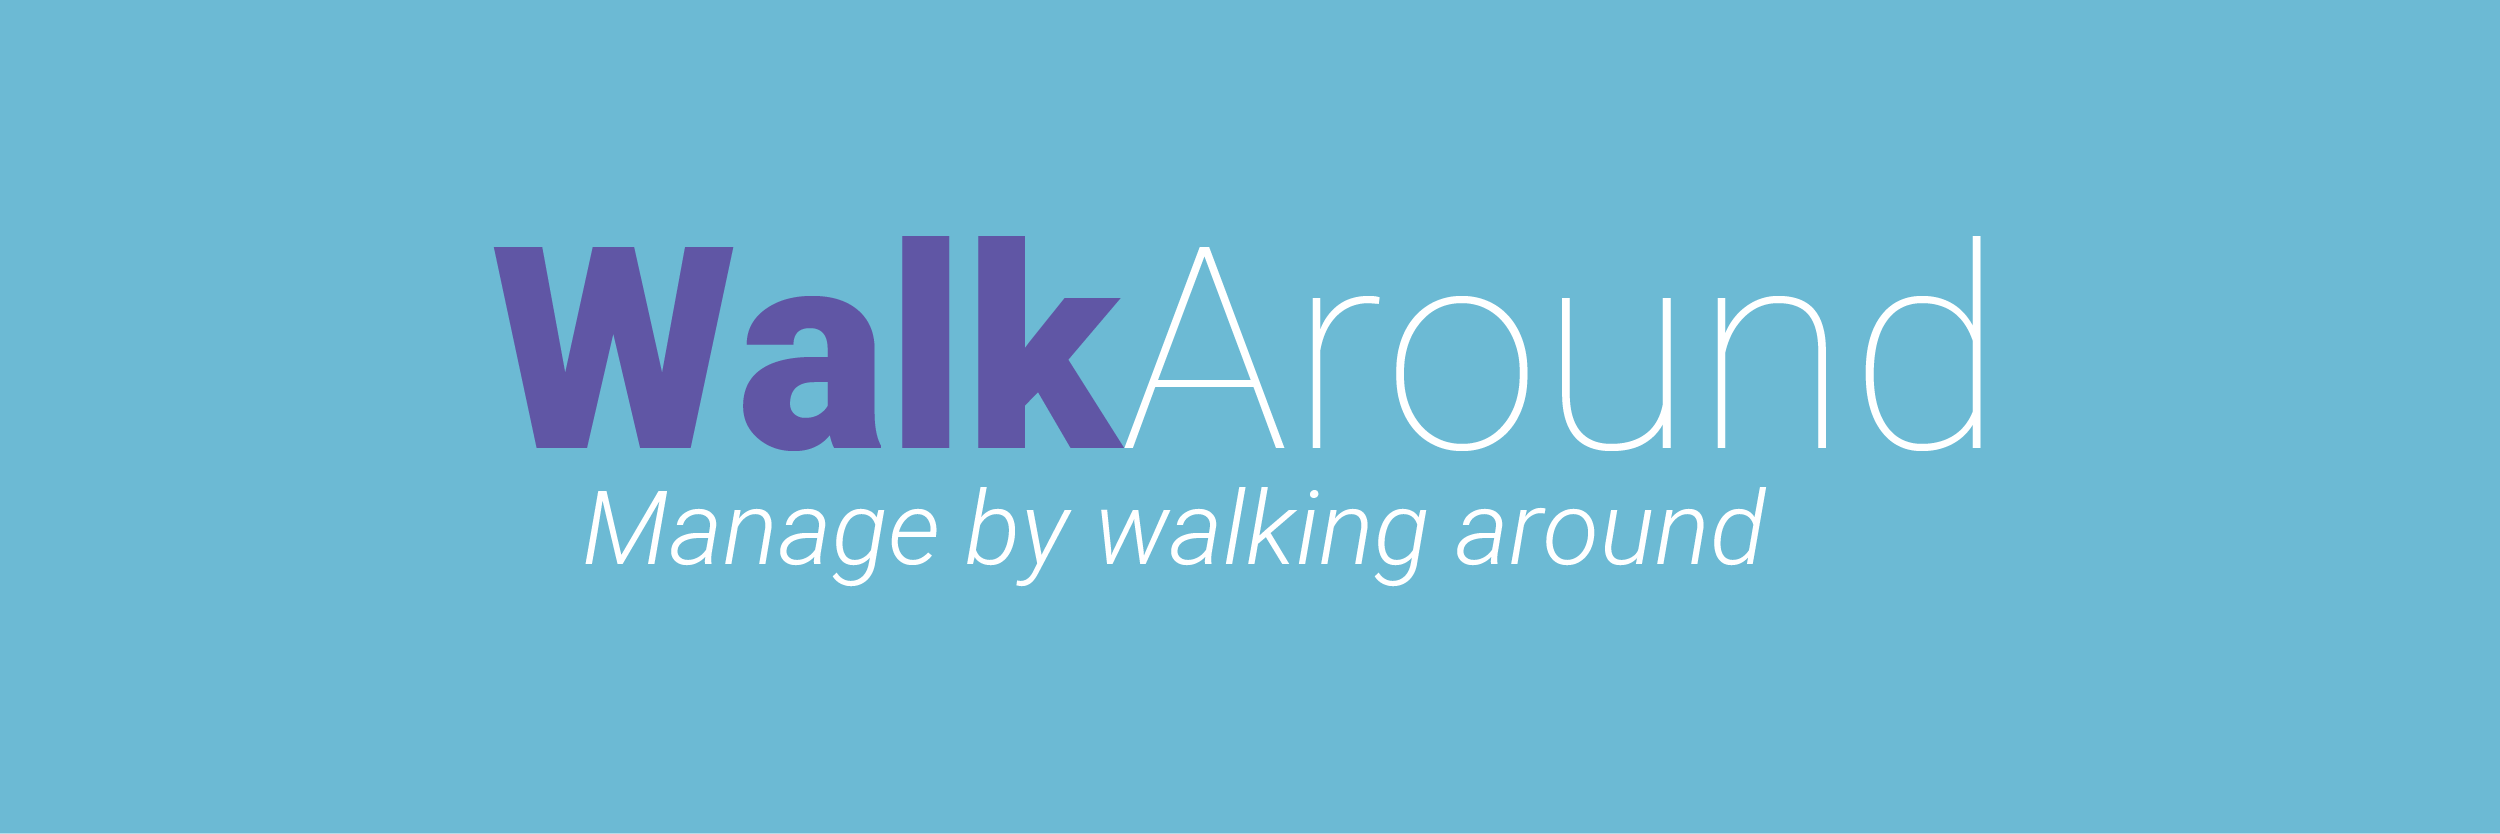 Walk Around-01